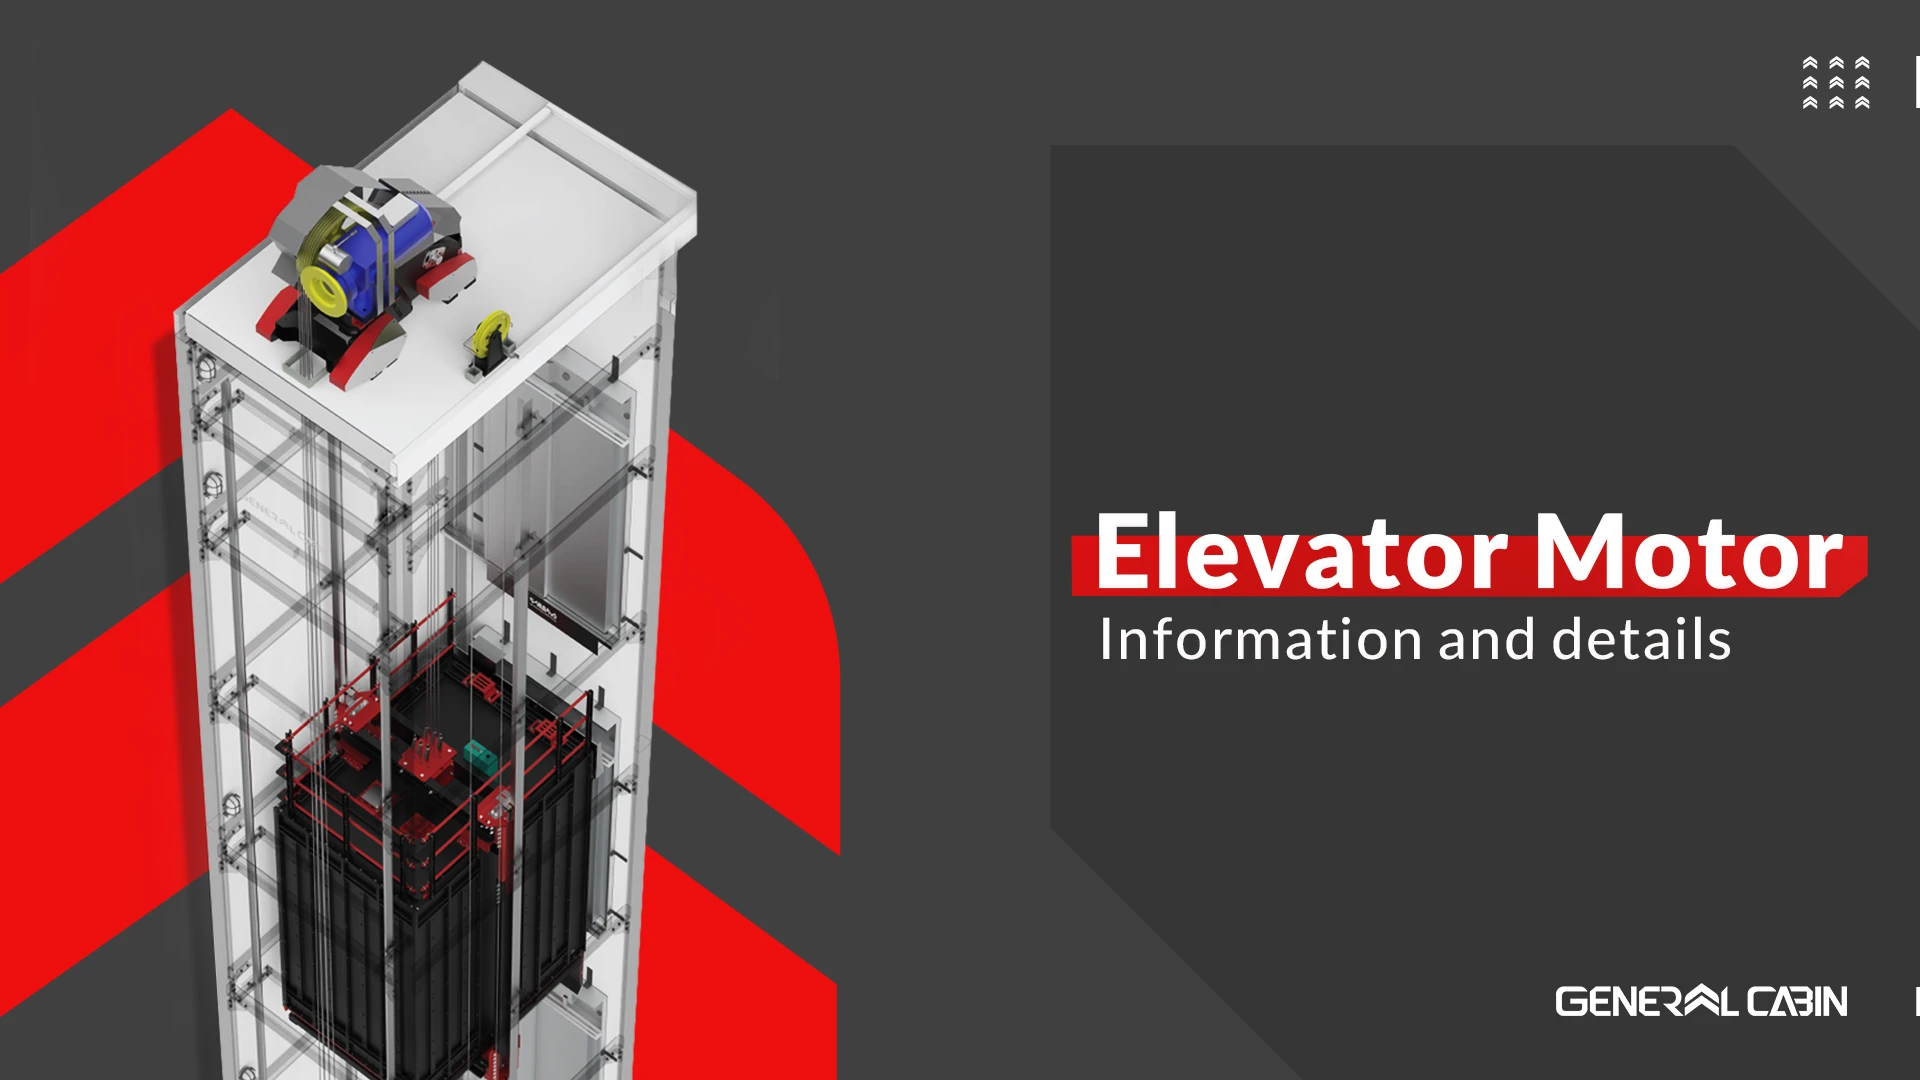 Elevator engine